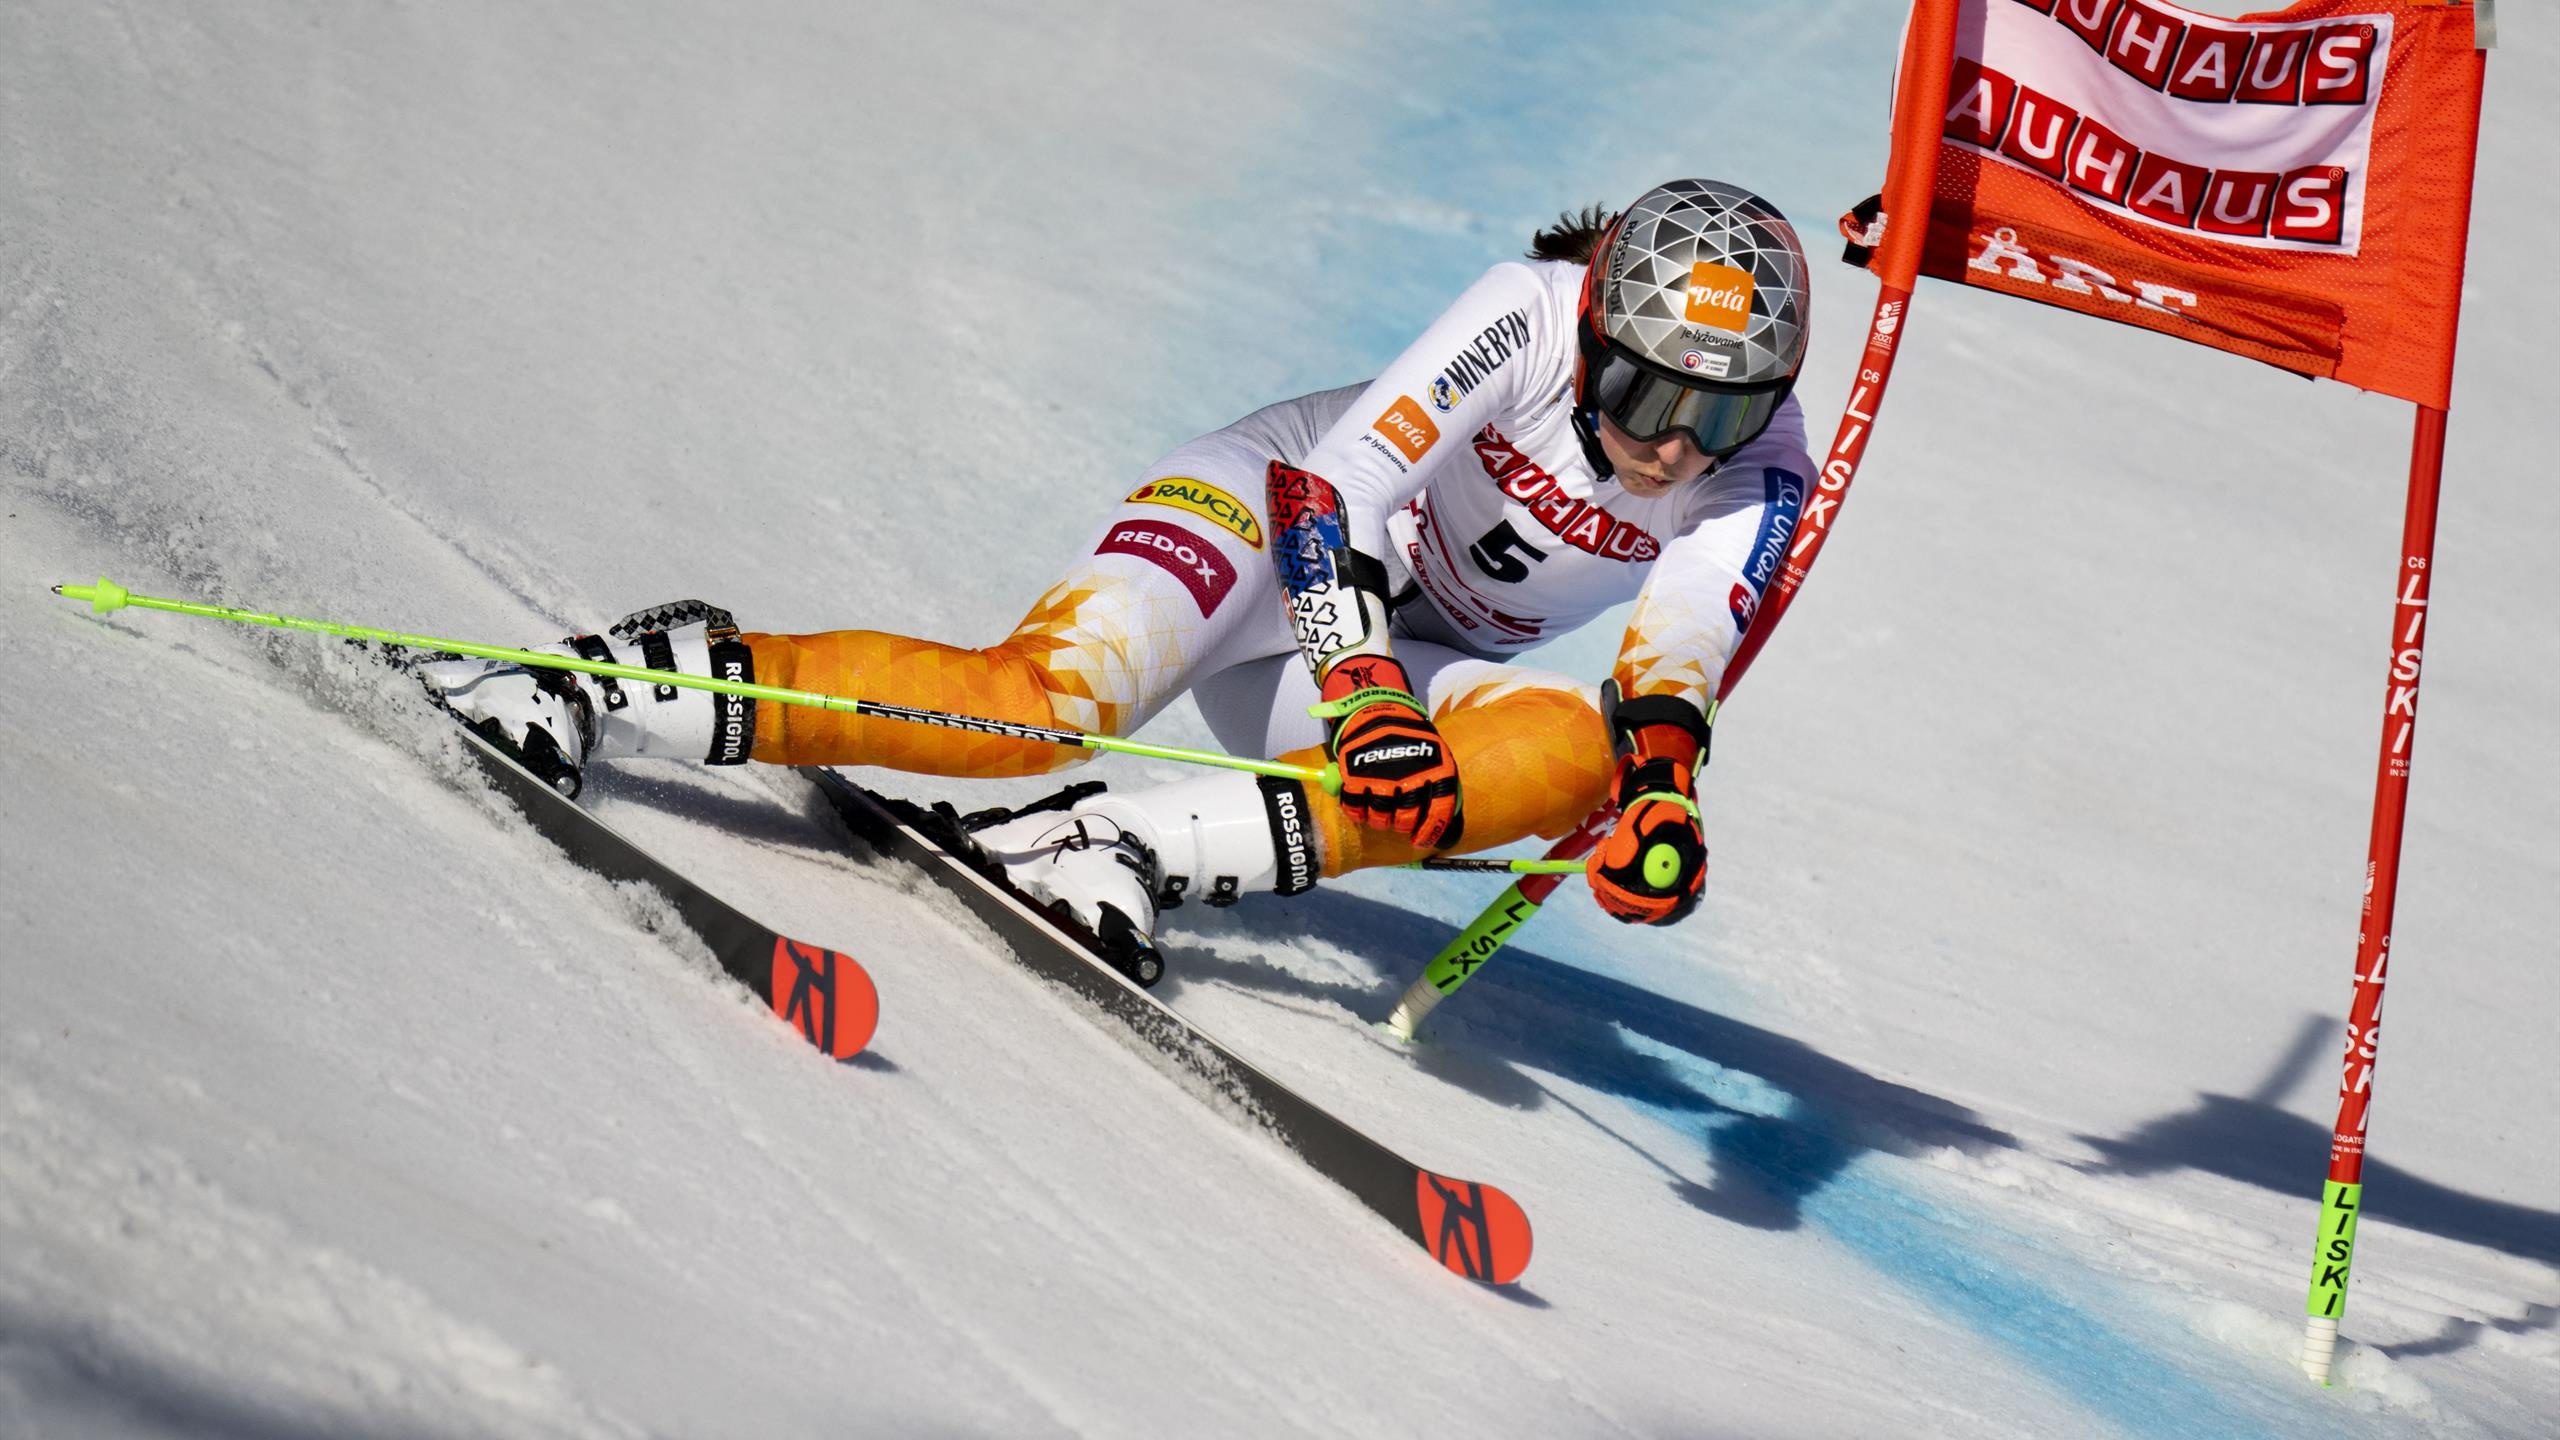 Skiing: Alpine Skiing, Petra Vlhova, Giant Slalom, Downhill in a wavy course. 2560x1440 HD Wallpaper.